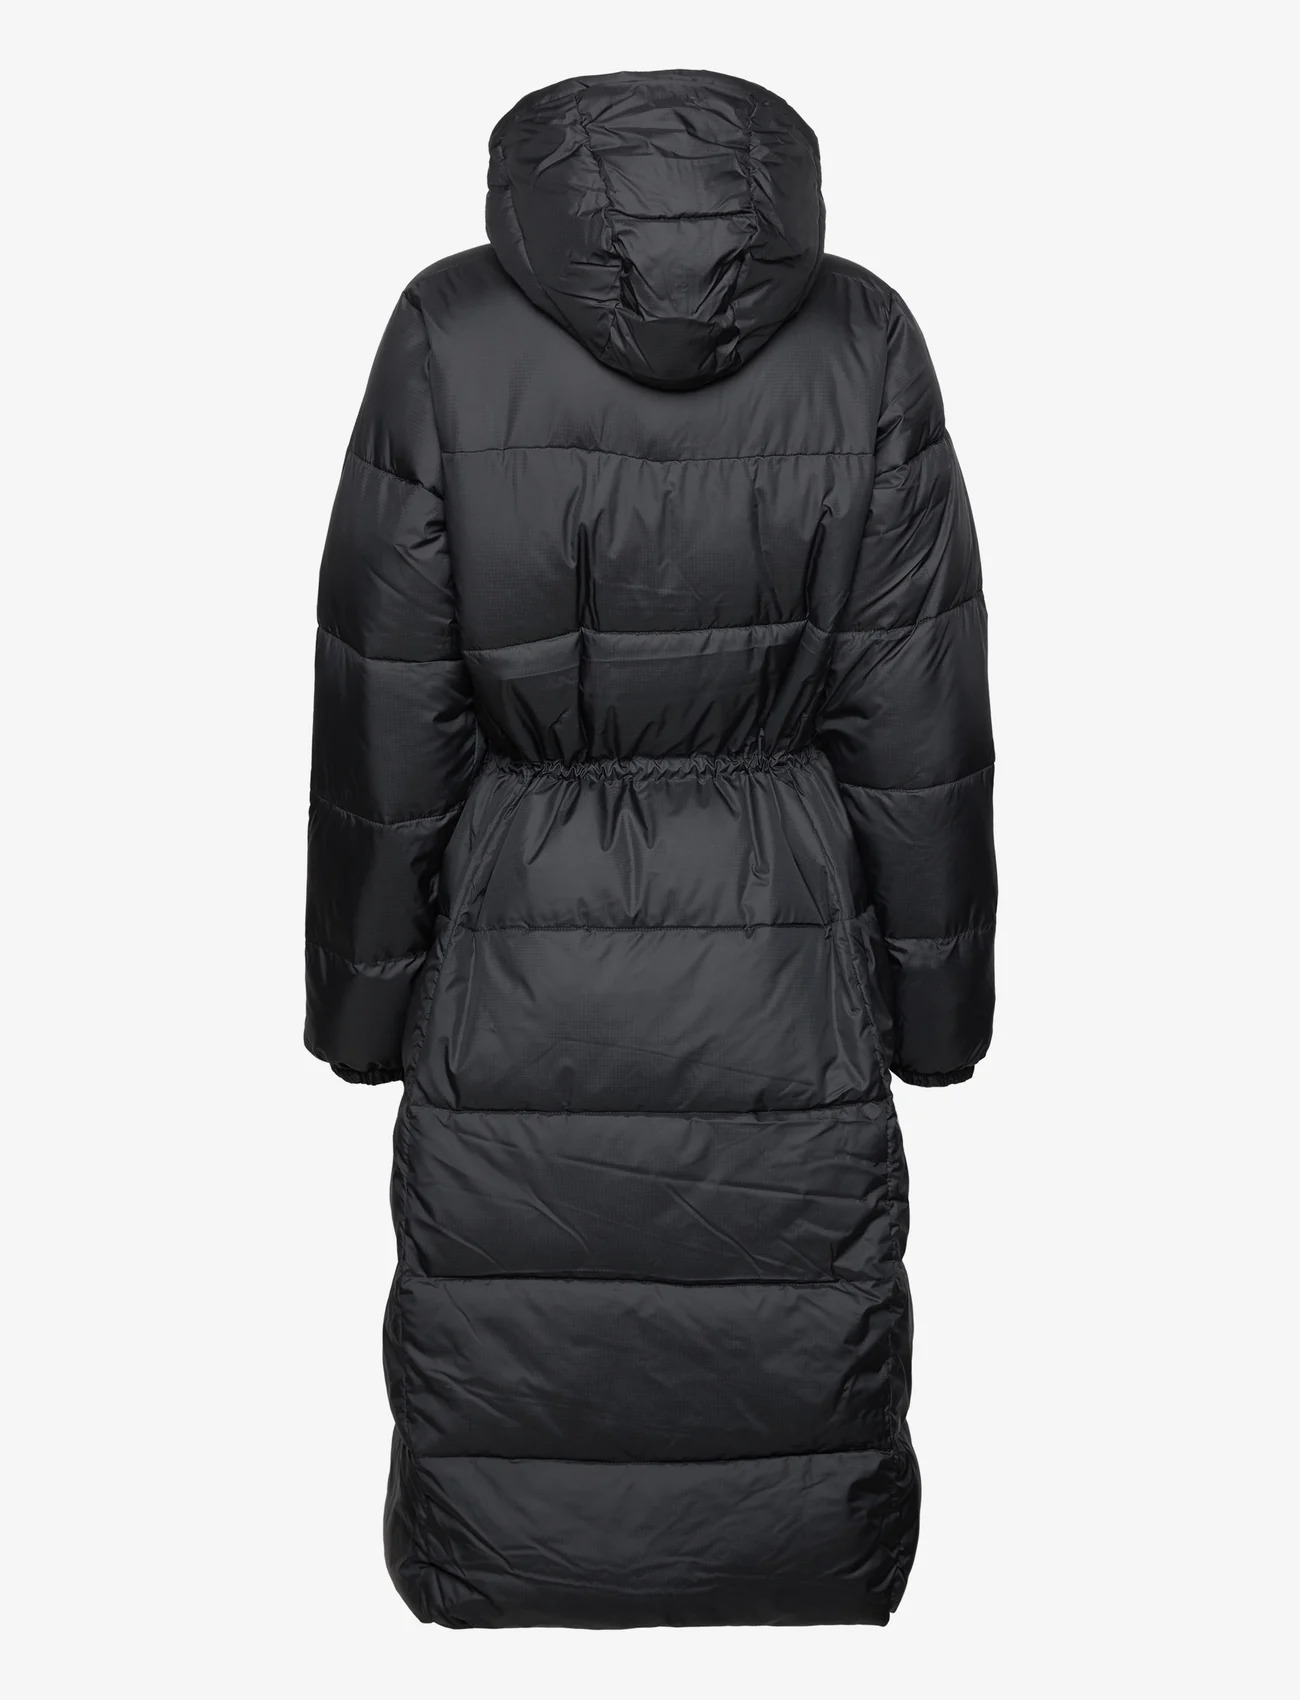 Columbia Sportswear - Puffect Long Jacket - padded coats - black - 1